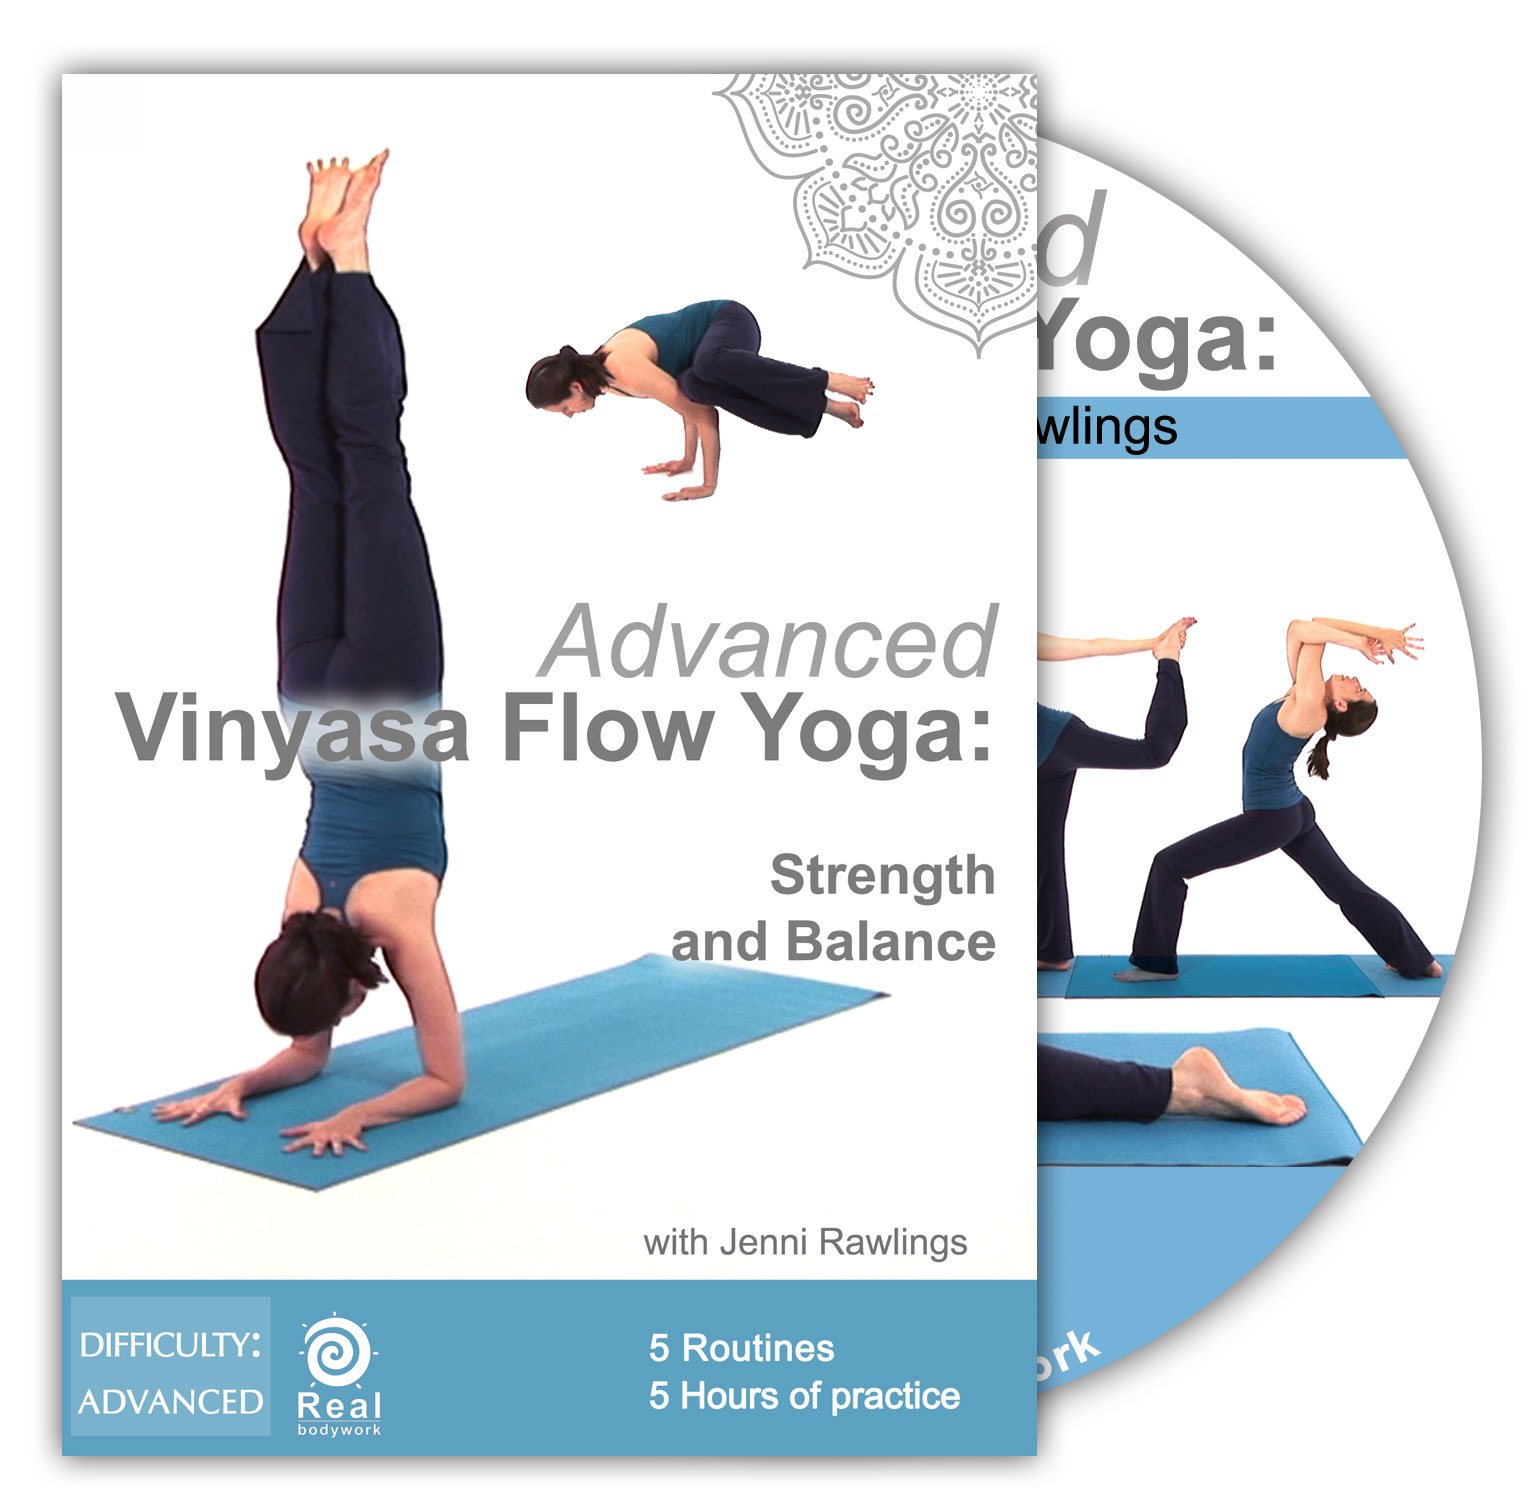 https://www.realbodywork.com/wp-content/uploads/2015/06/advanced-vinyasa-yoga.jpg